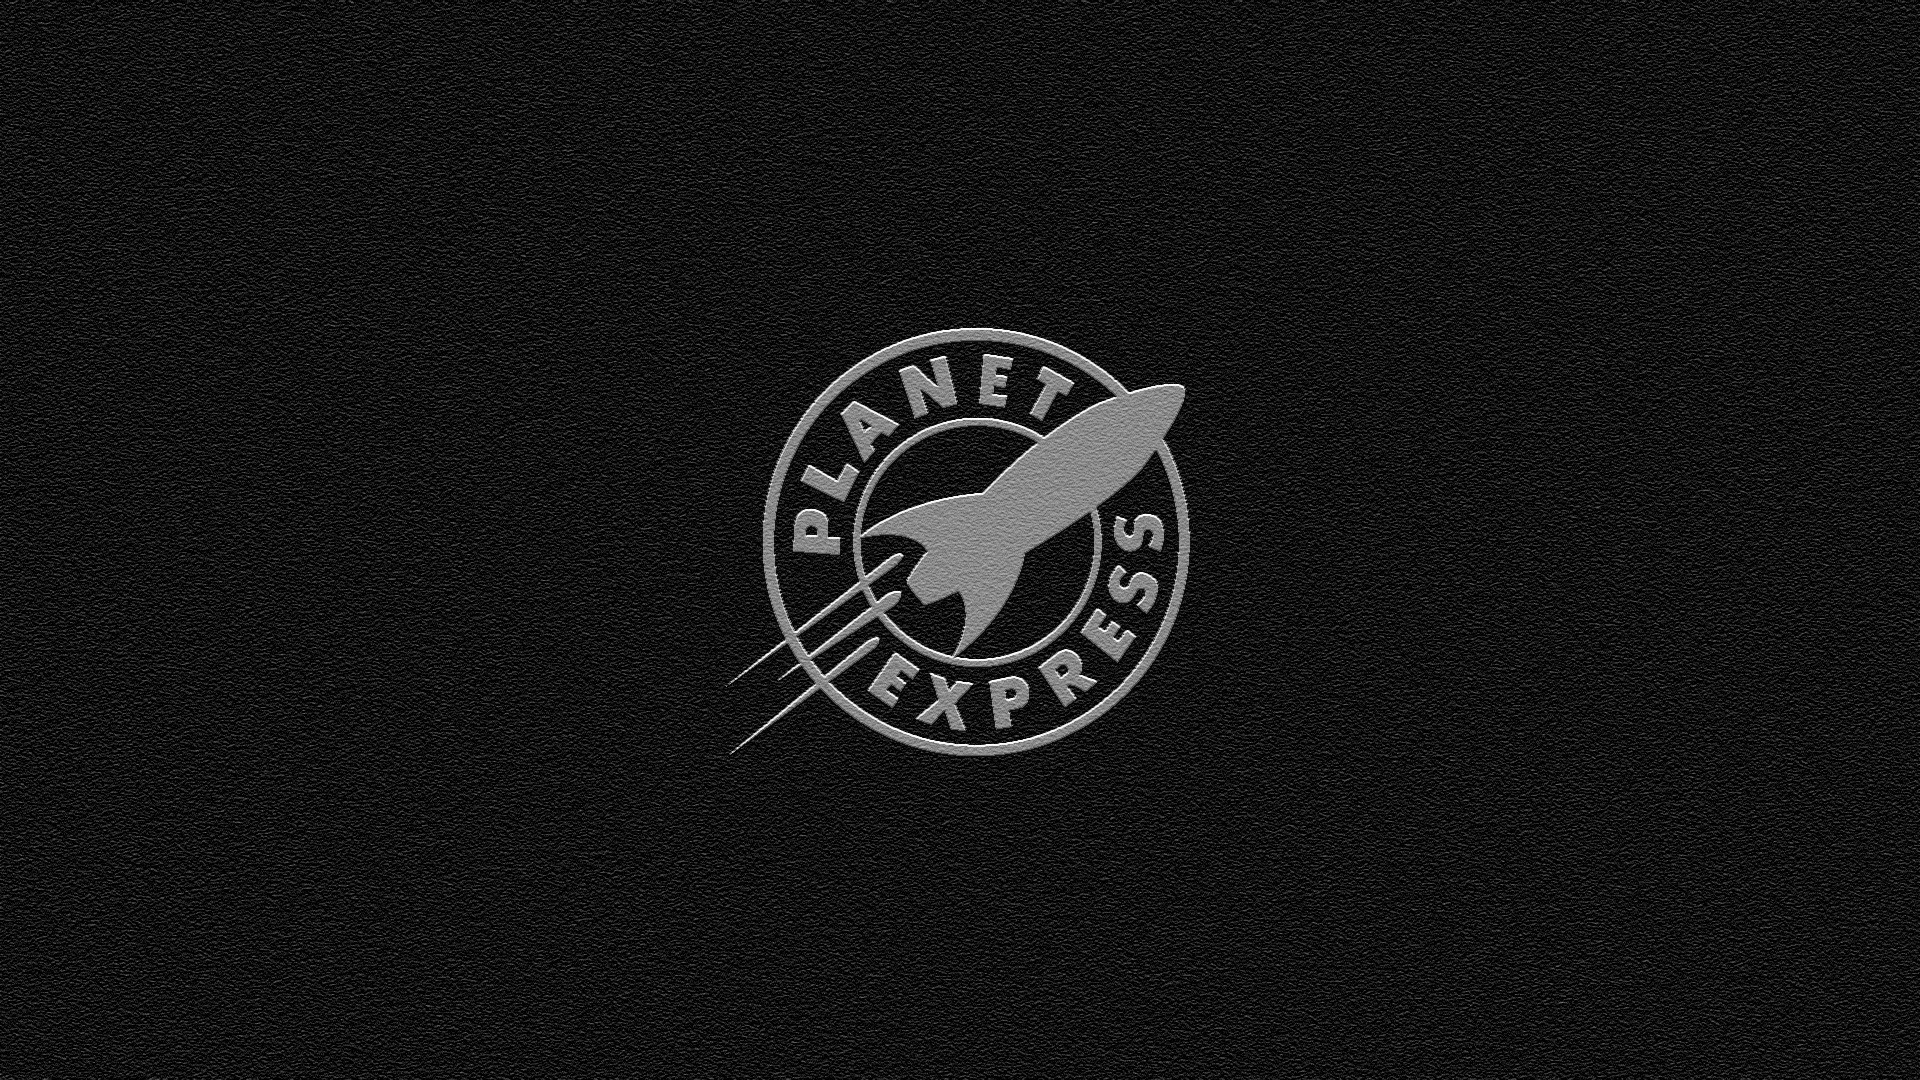 General 1920x1080 logo Futurama monochrome minimalism TV series dark background planet express